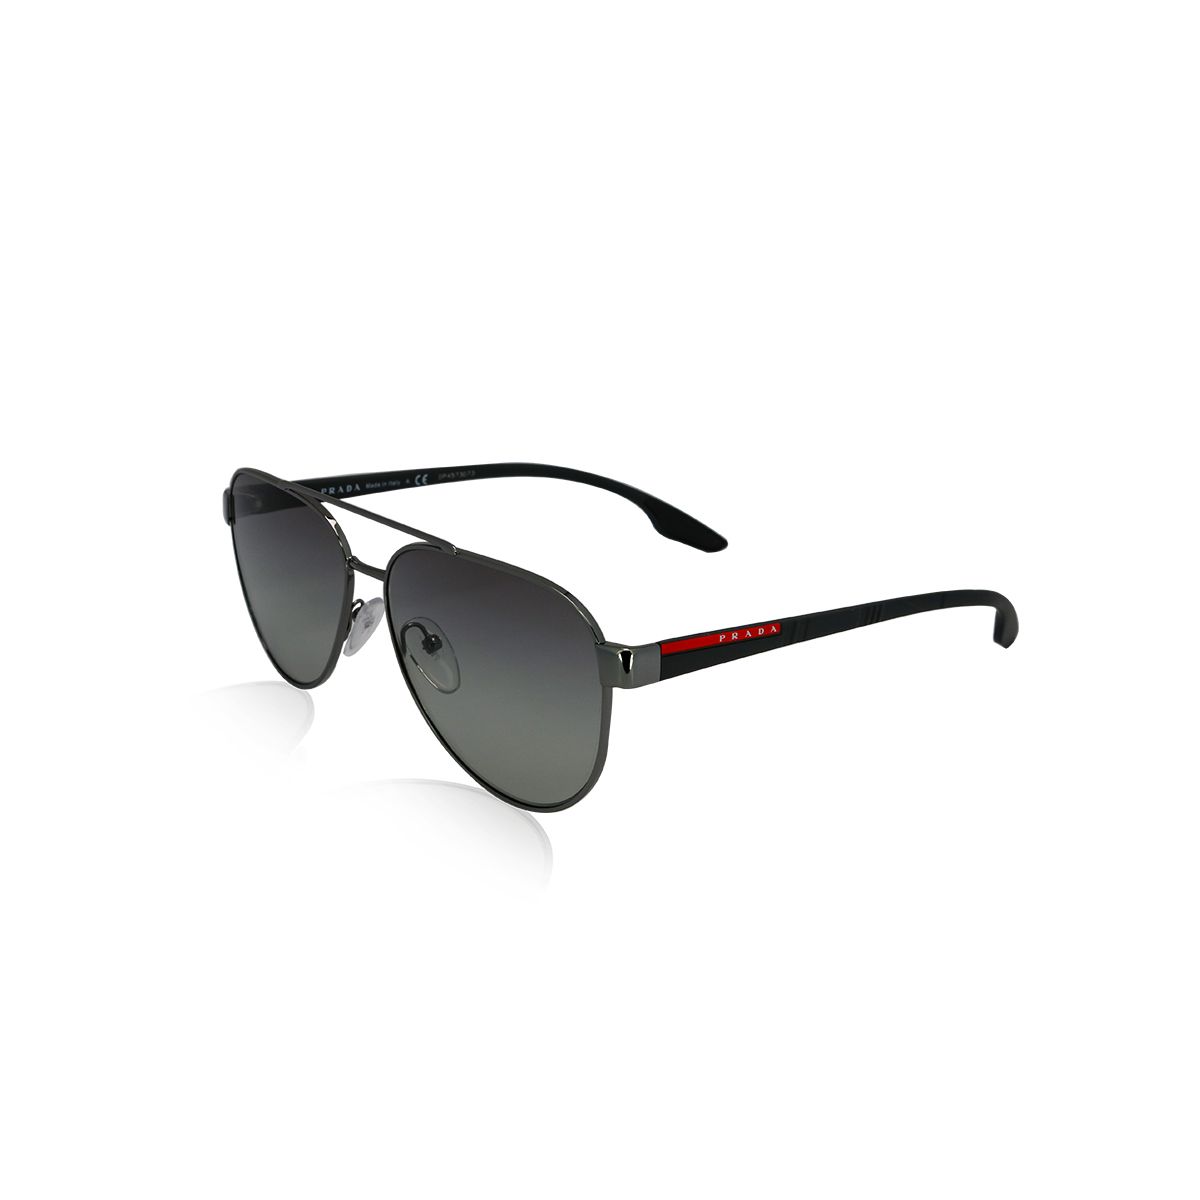 PS54TS Pilot Sunglasses 5AV3M1 - size 58